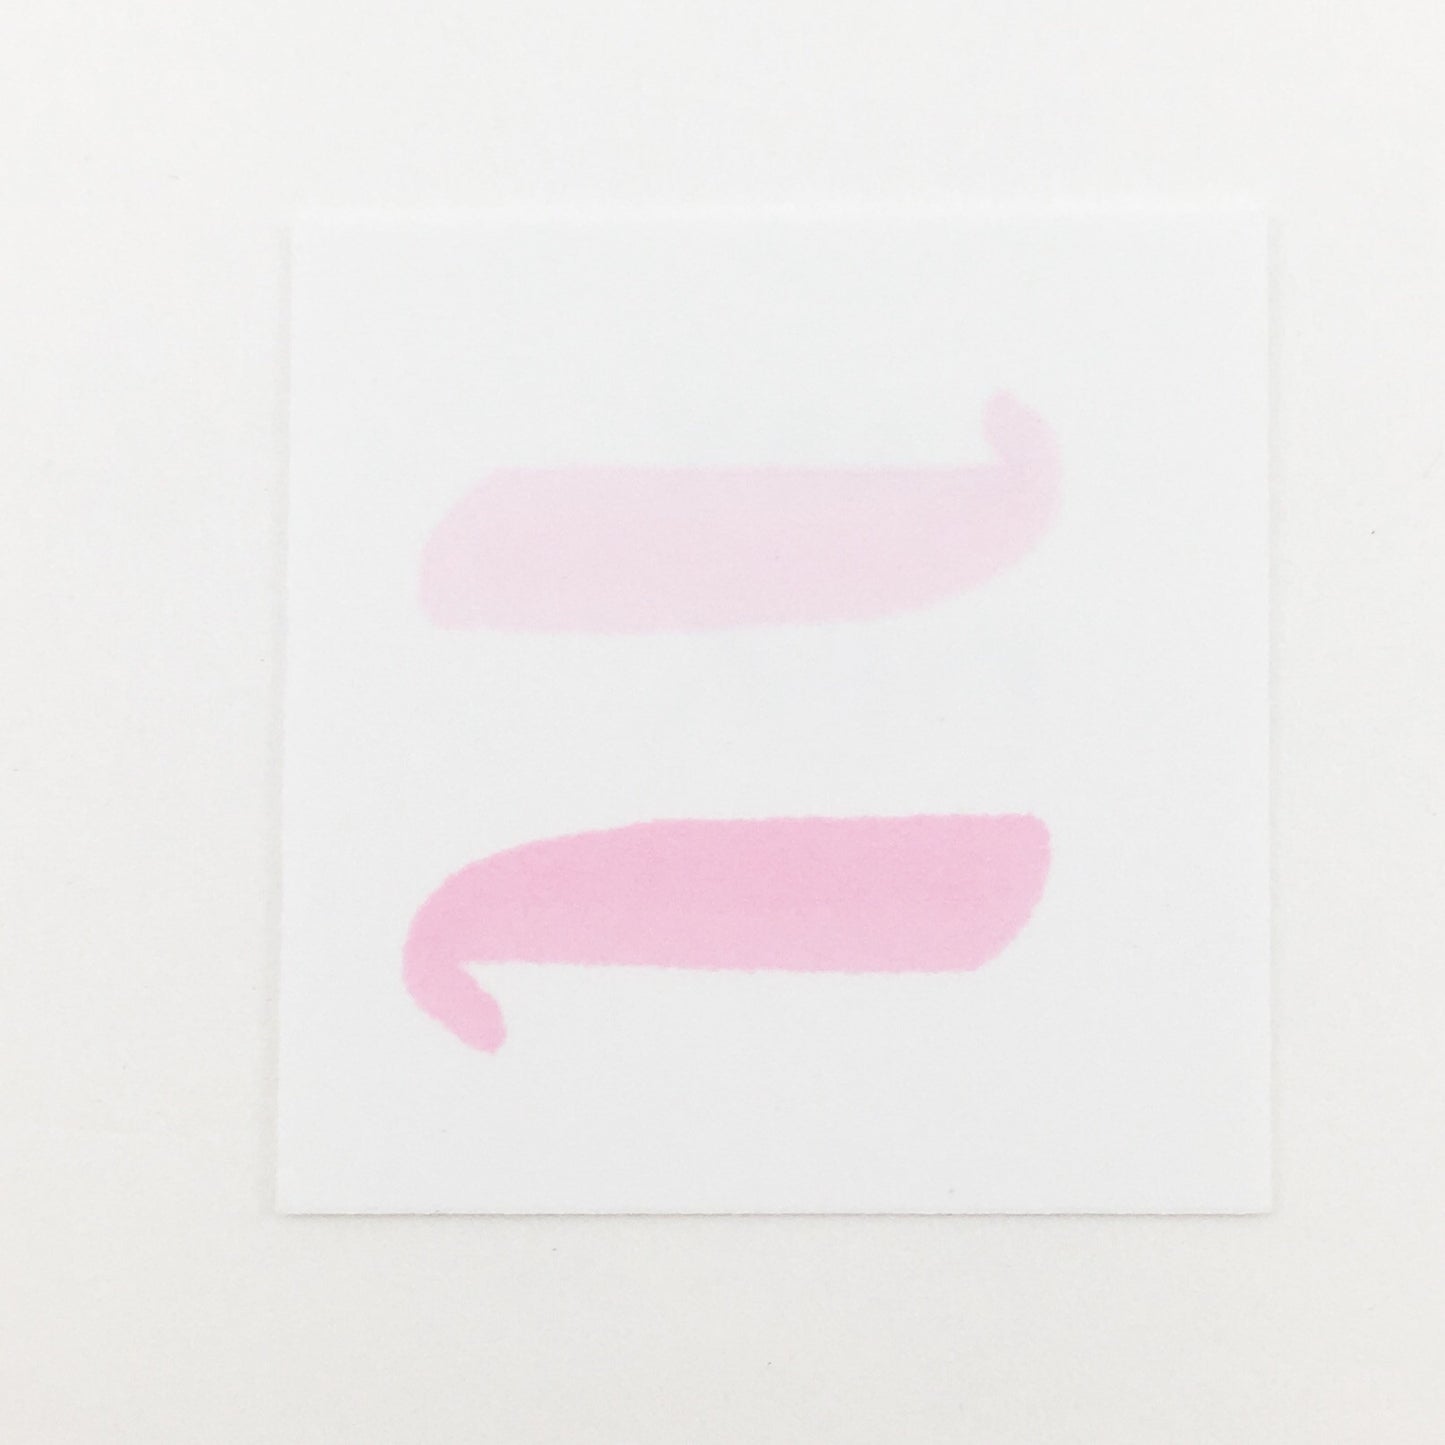 Kuretake Zig "Brushables" Two-Tone Brush Markers - 026 - Baby Pink by Kuretake - K. A. Artist Shop